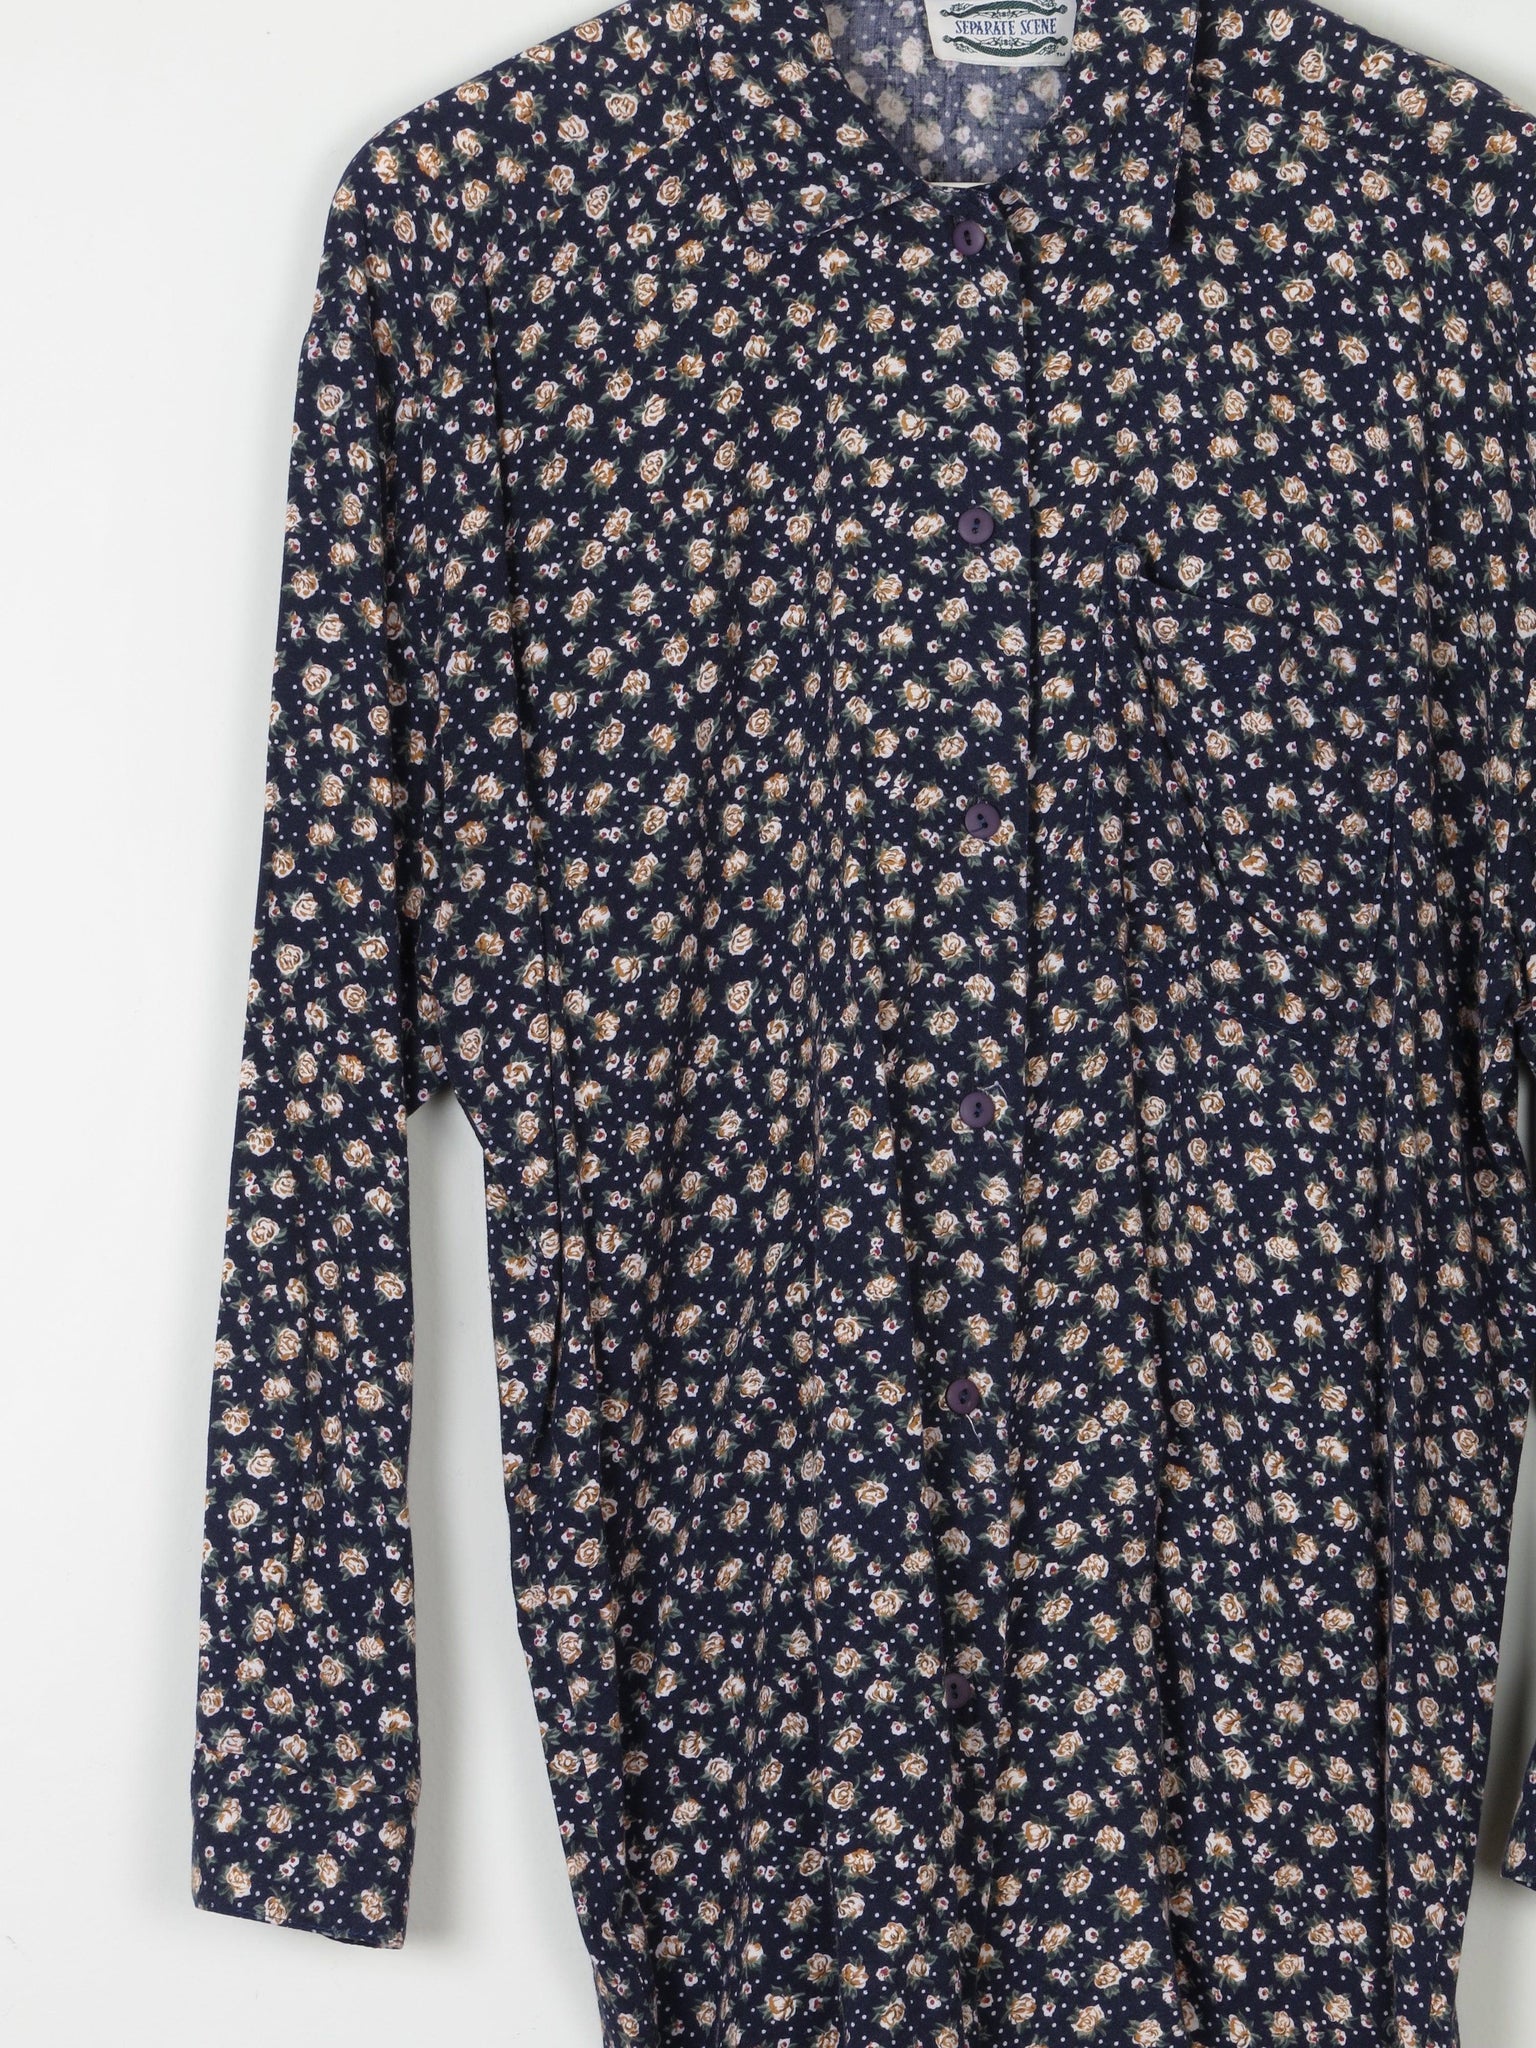 Women’s Floral Print Navy Vintage  Shirt/Blouse S-L - The Harlequin